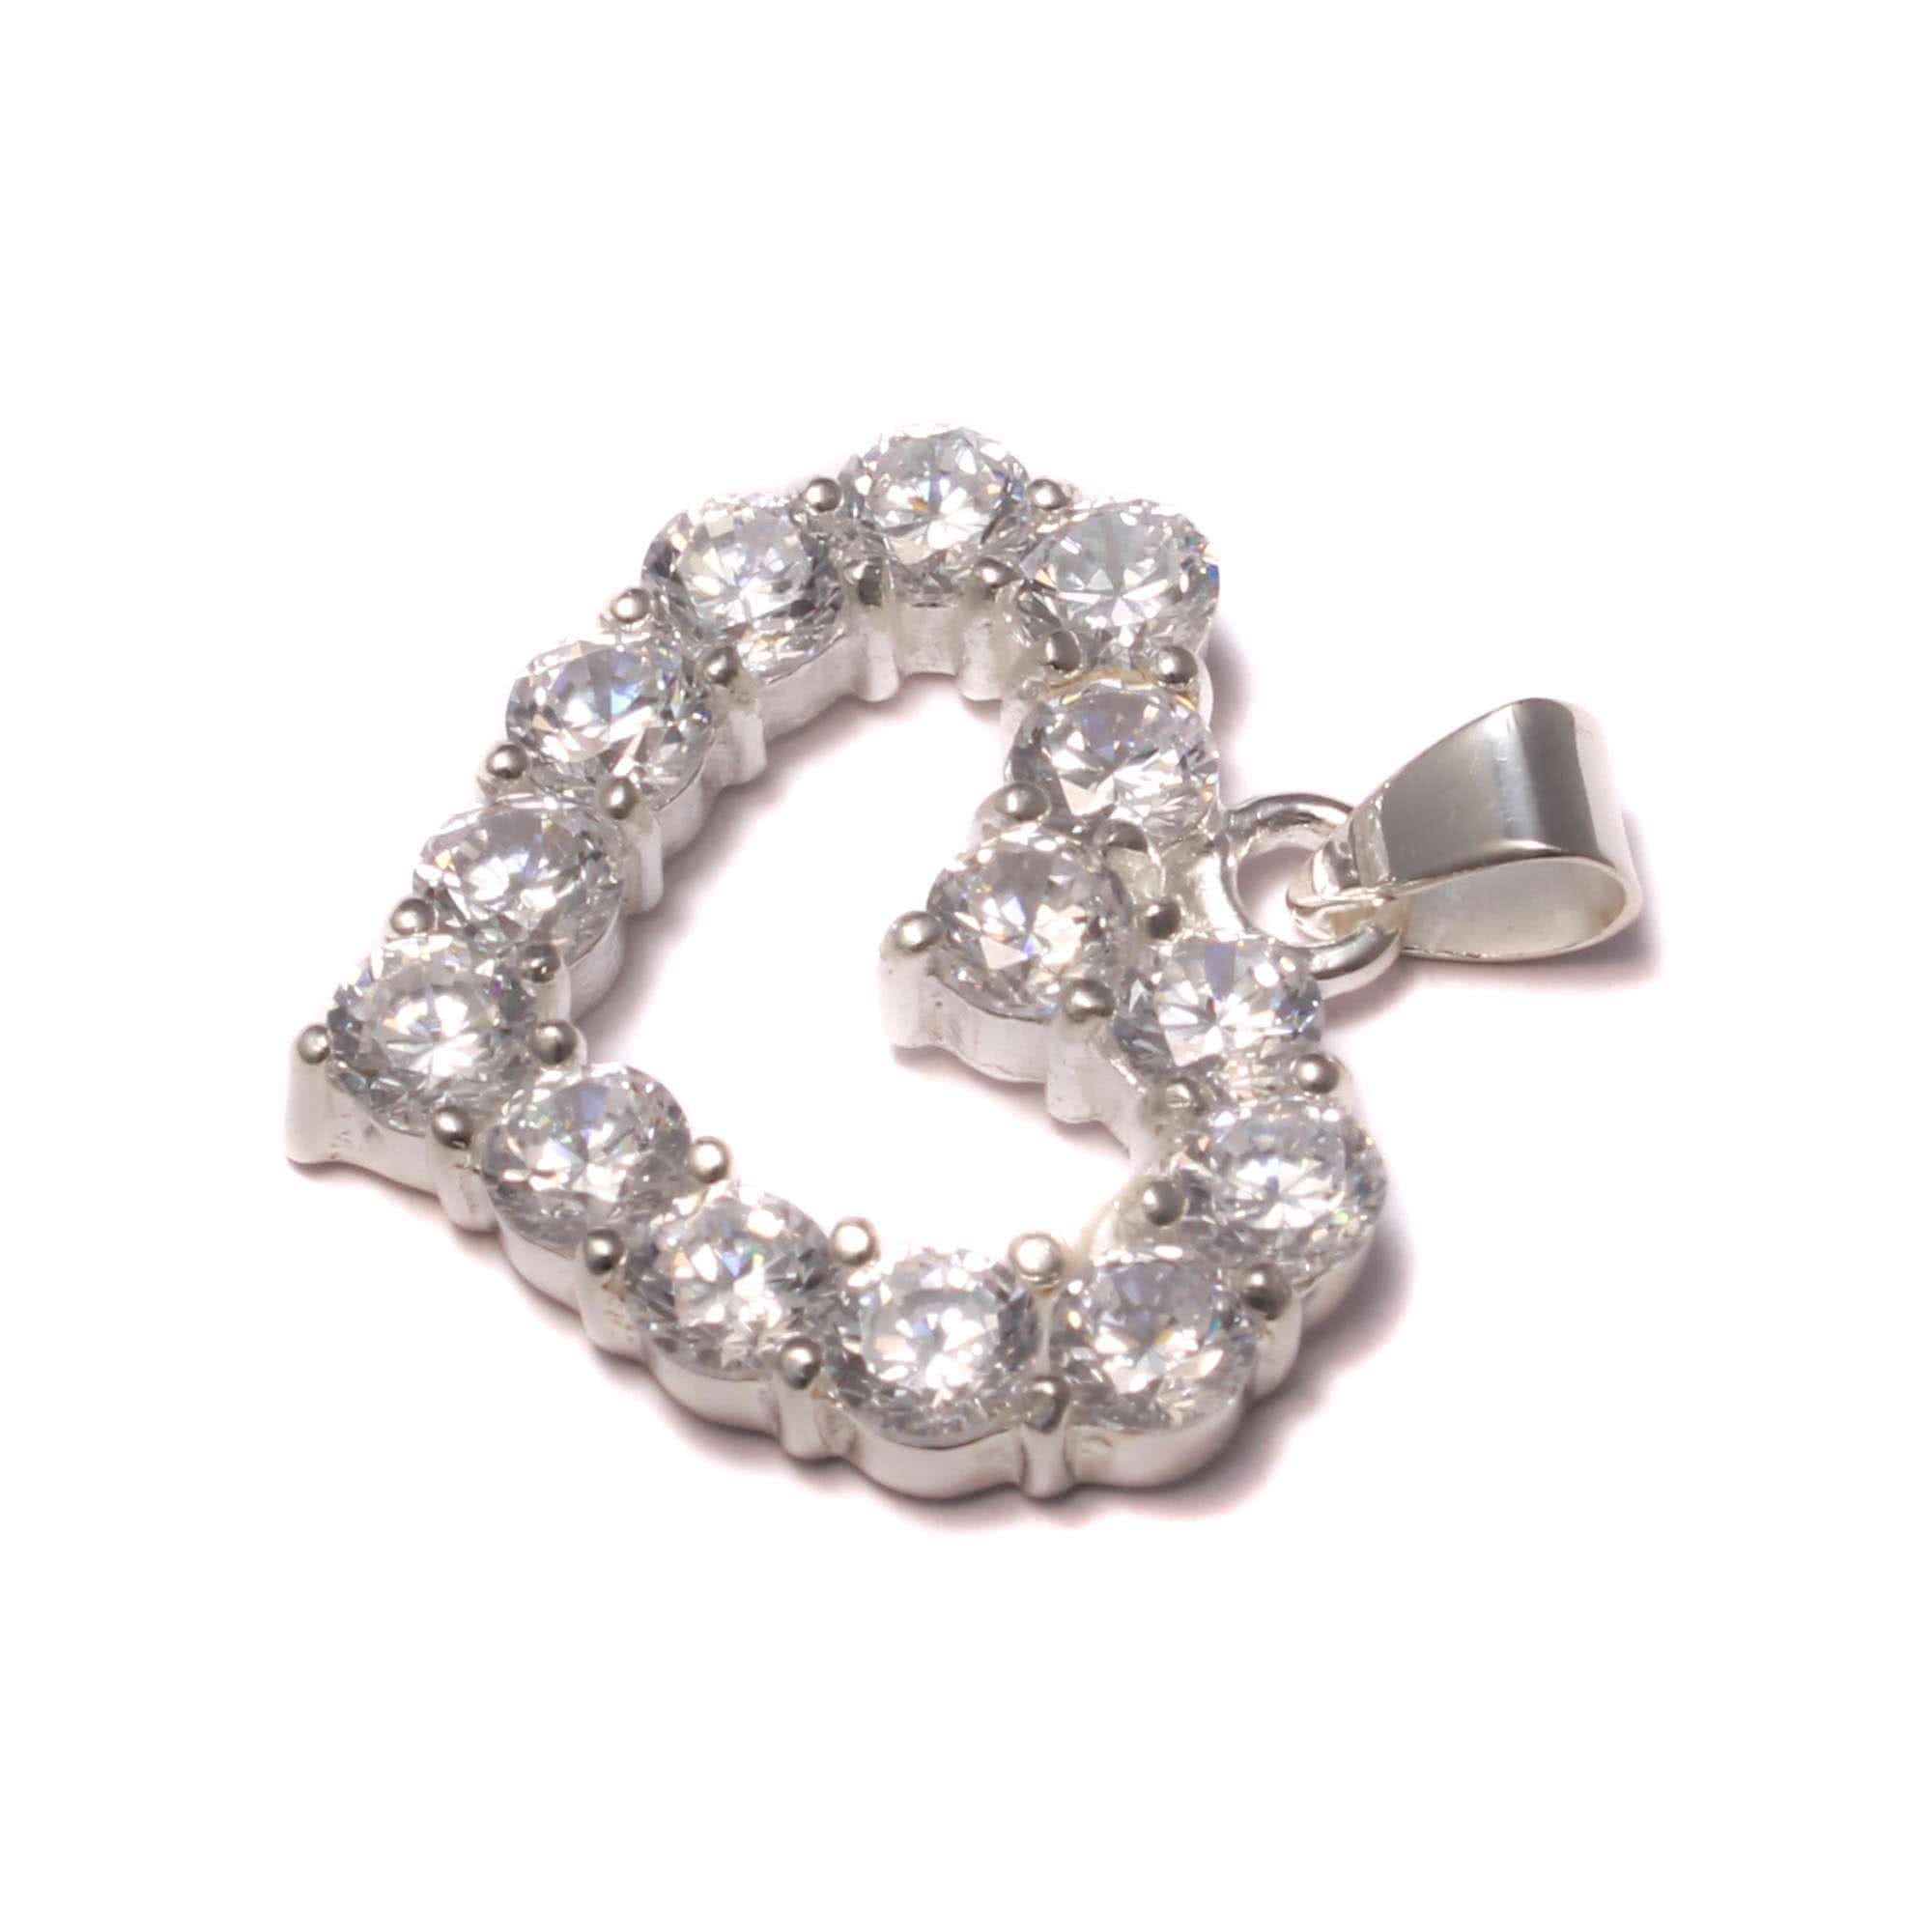 Großer Zirkonia Herz Silber - Sterling 1702 aus Diamonds - 925 Your Love Anhänger